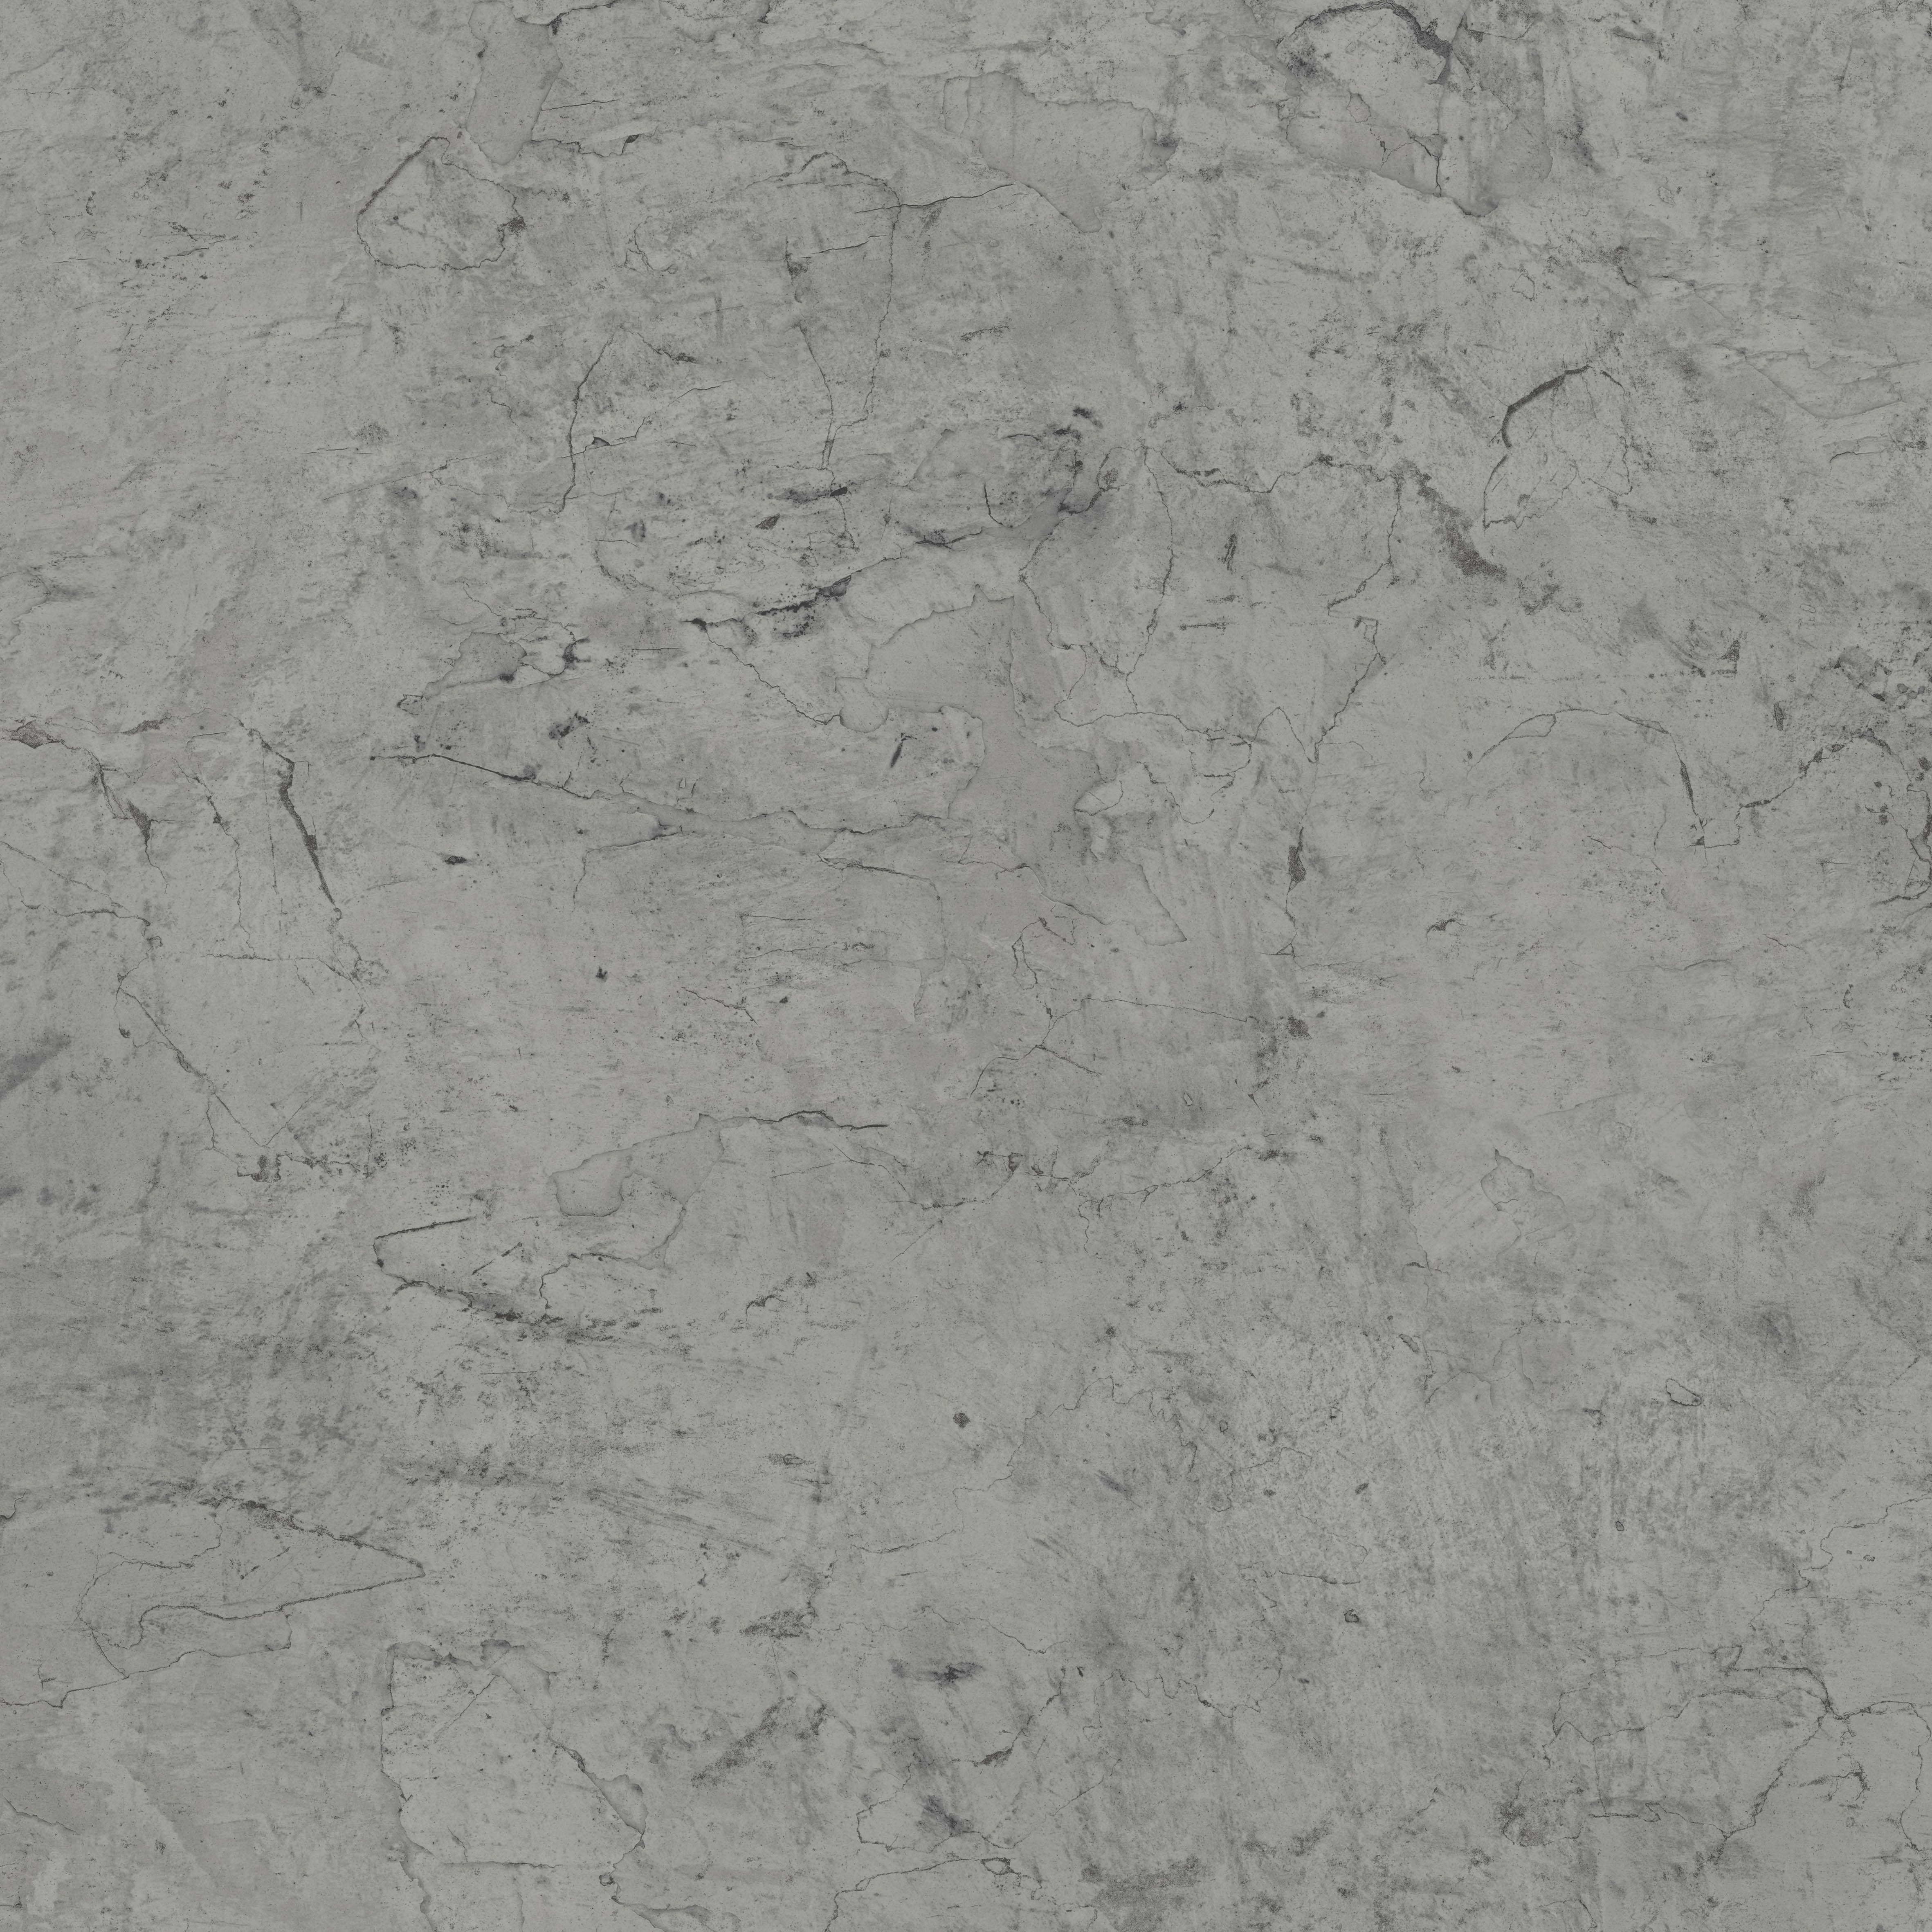 мрамор серебристый столешница антарес